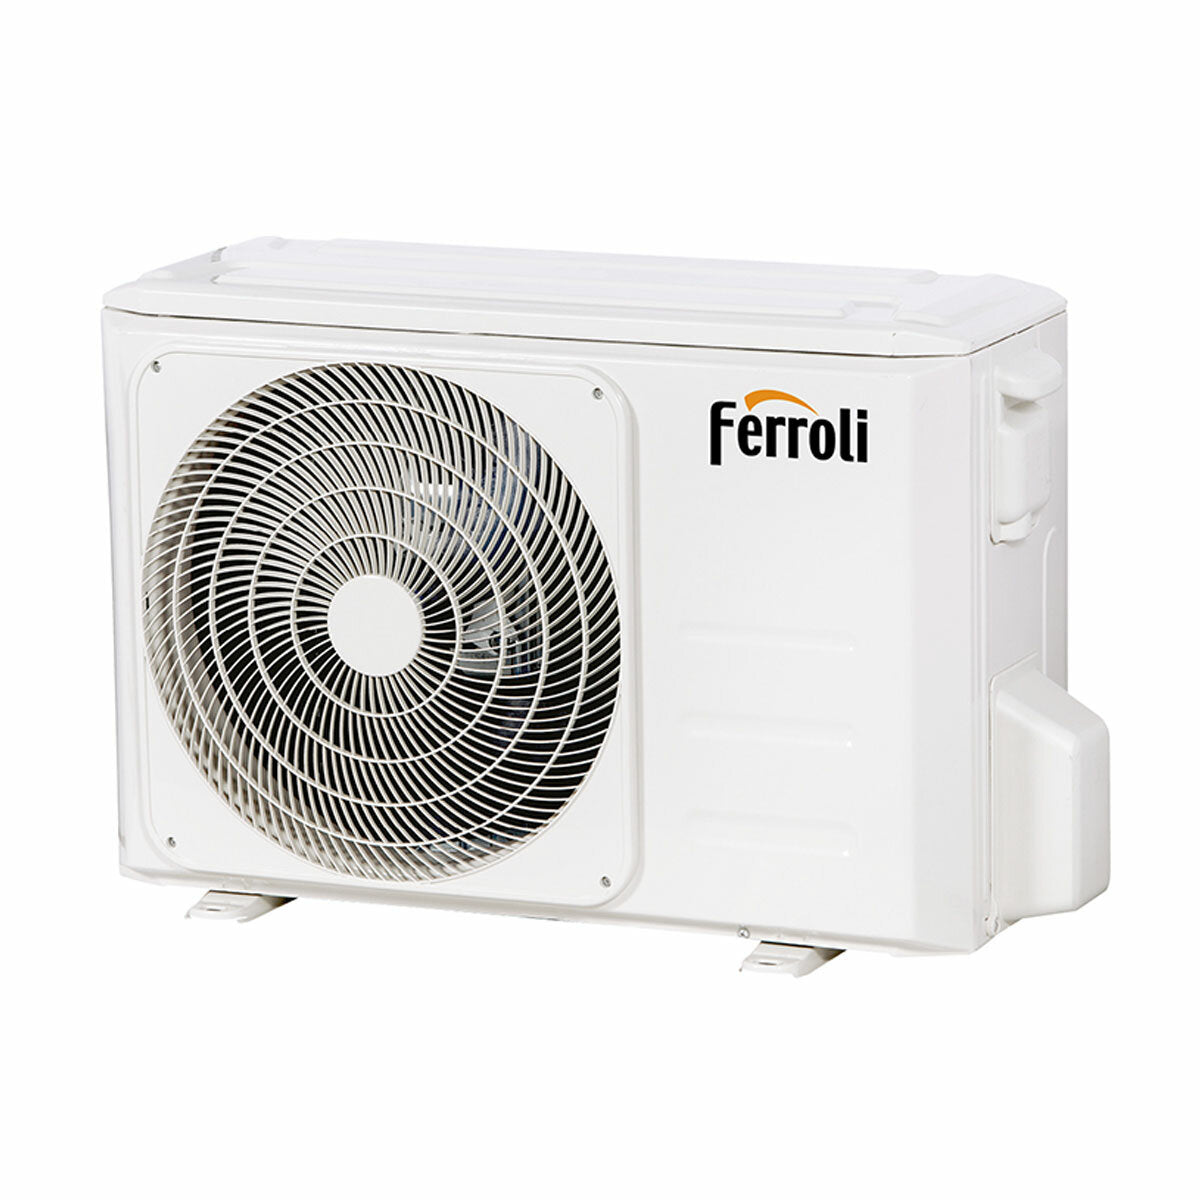 Ferroli Giada S 12000 BTU R32 Inverter Air Conditioner Class A++ WiFi